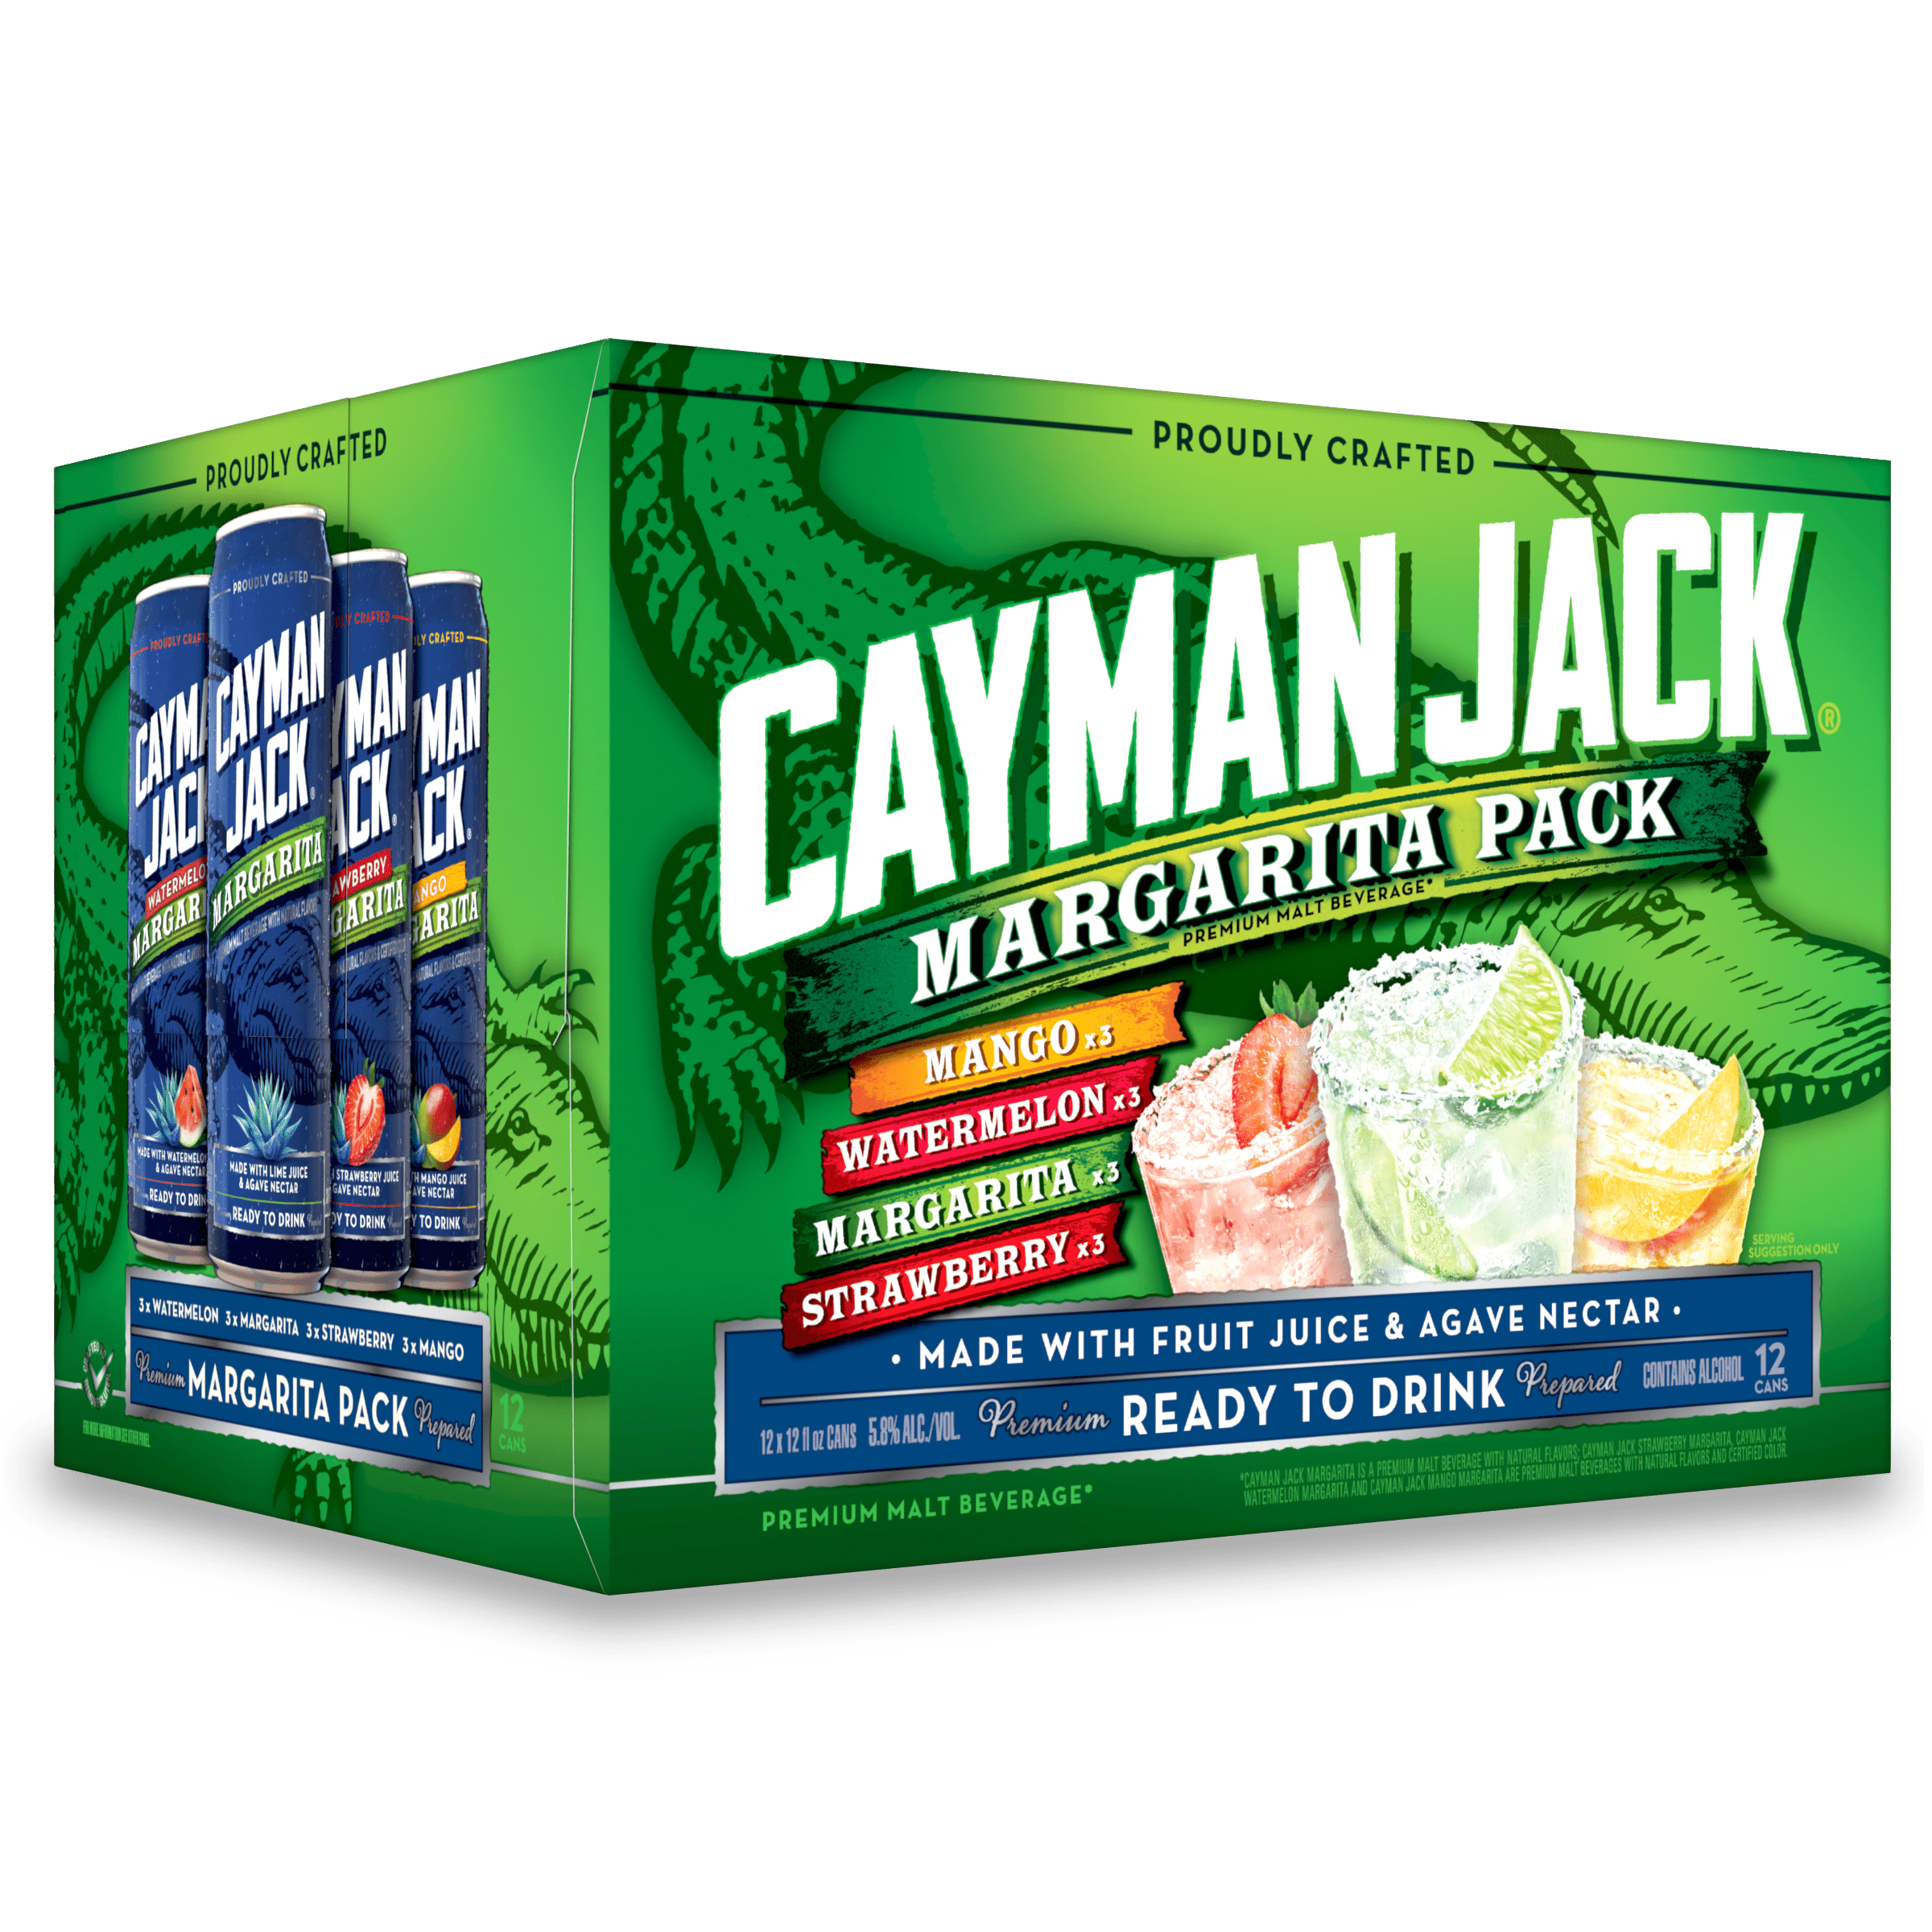 cayman-jack-margarita-variety-pack-12-pack-12-fl-oz-cans-5-8-abv